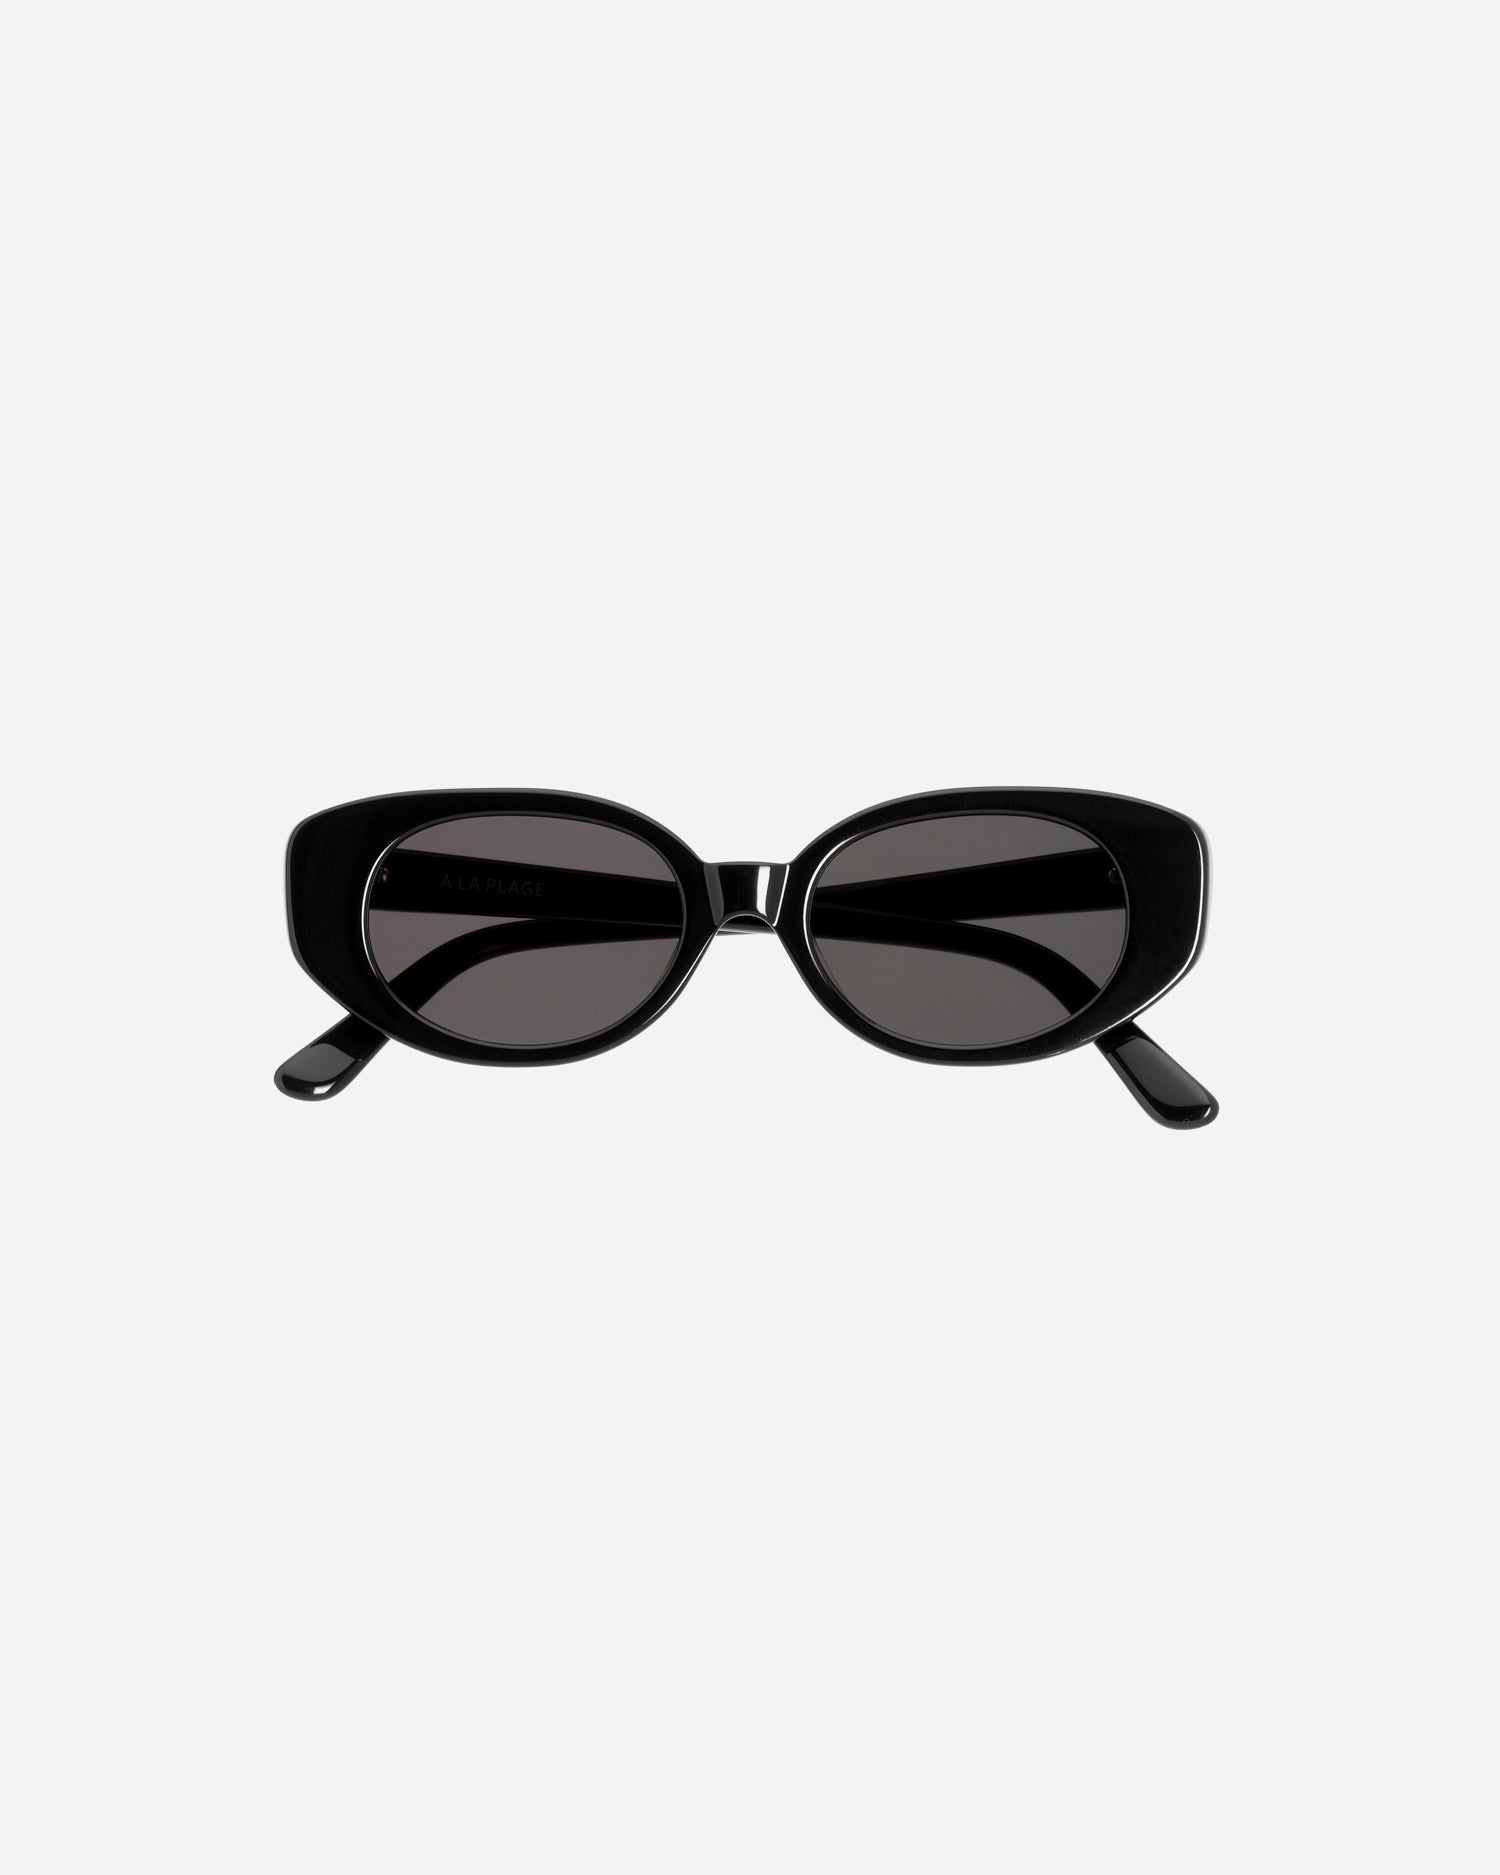 'A La Plage' in Black — Velvet Canyon Eyewear